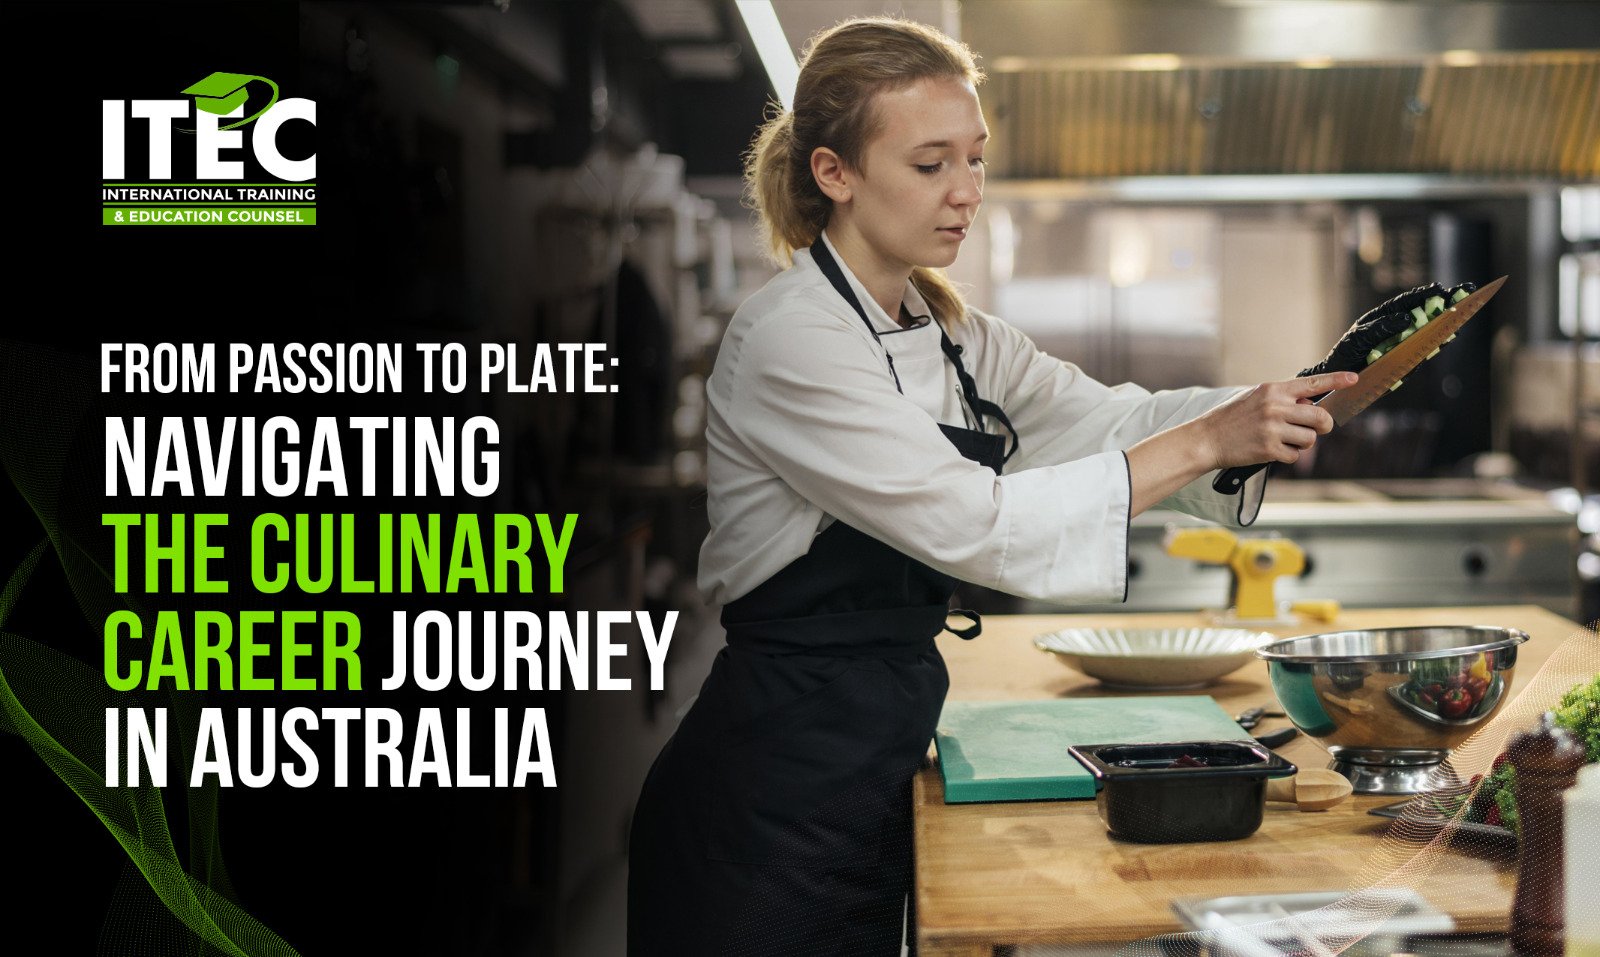 Culinary Career Journey in Australia